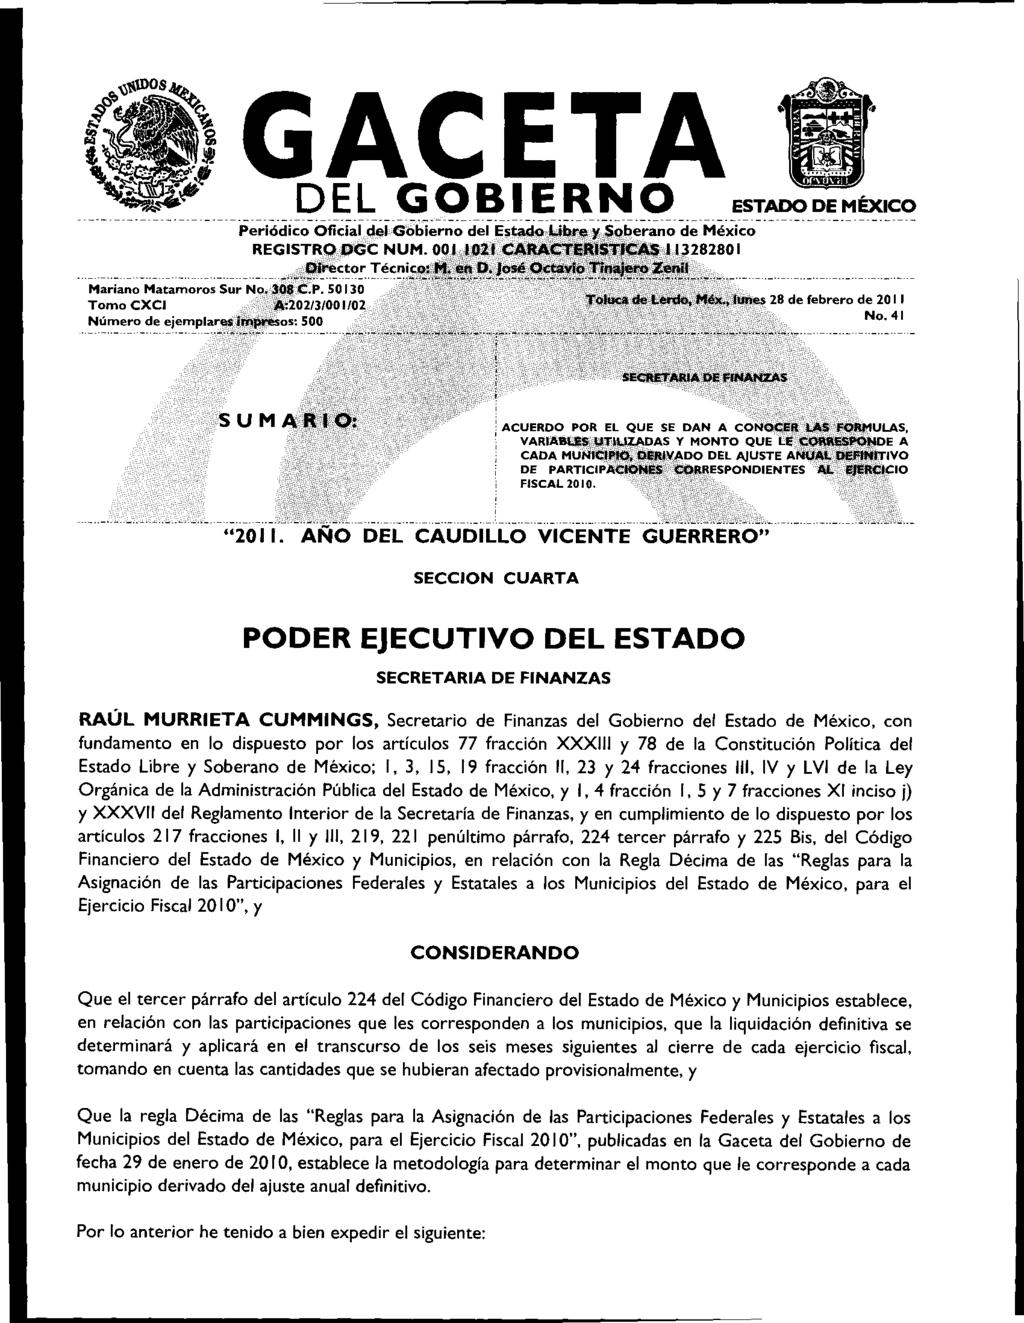 Mariano Matamoros Sur No. 300 C.P. 50130 Tomo CXCI A:202/3/001/02 Número de ejemplares os: 500 1 ESTADO DE MÉXICO DEL GOBIERNO Periódico Oficial del Gobierno del Estado Ubre.